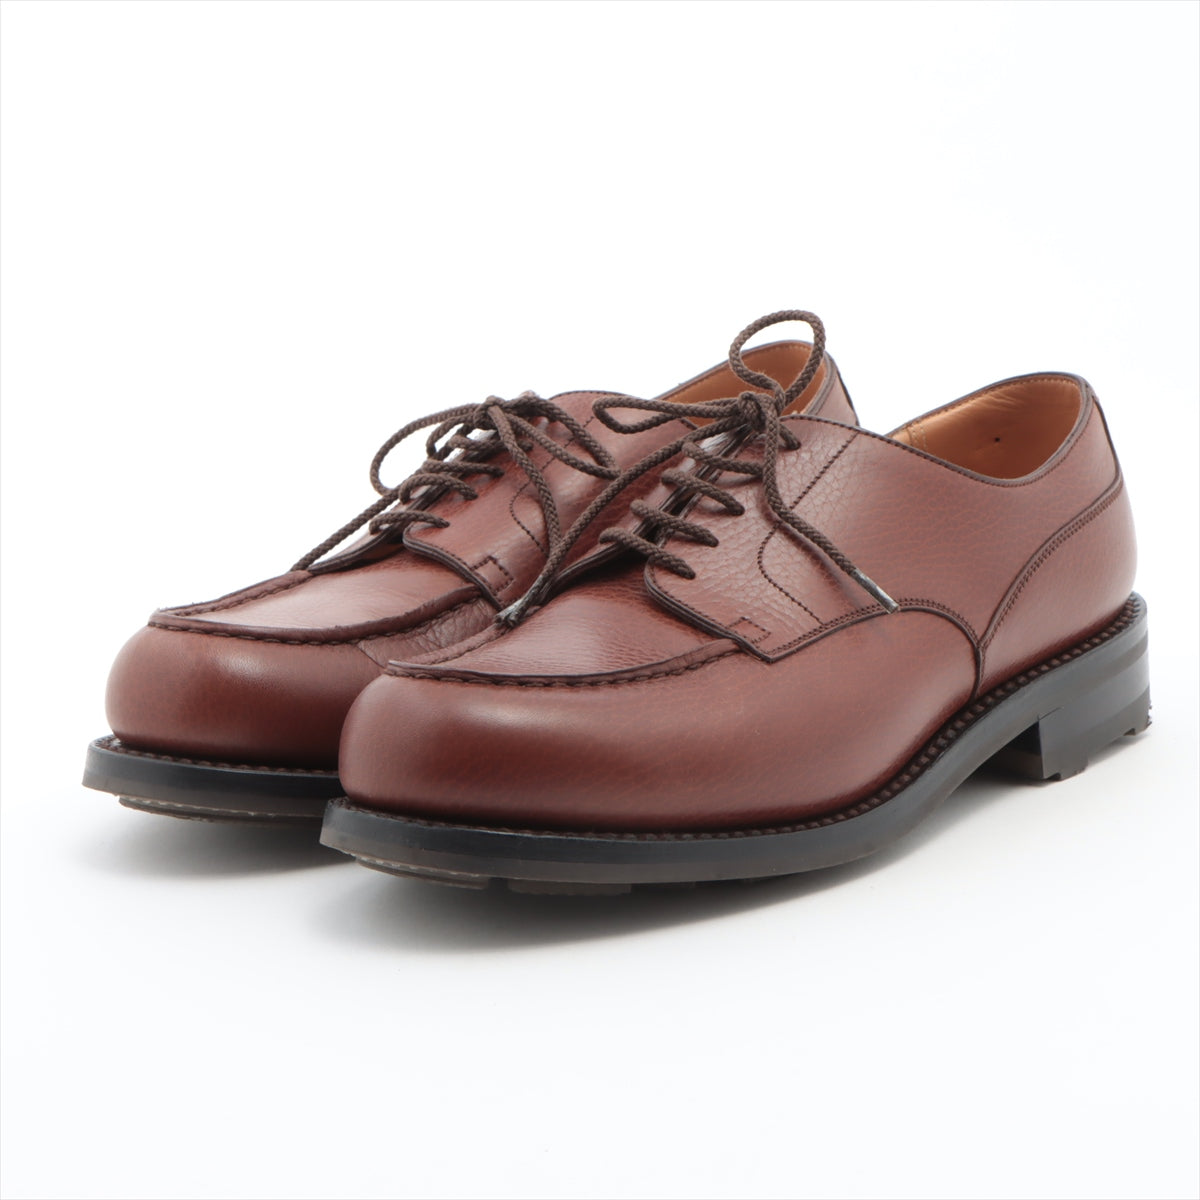 J. M. Weston Leather Leather shoes 6E Men's Brown